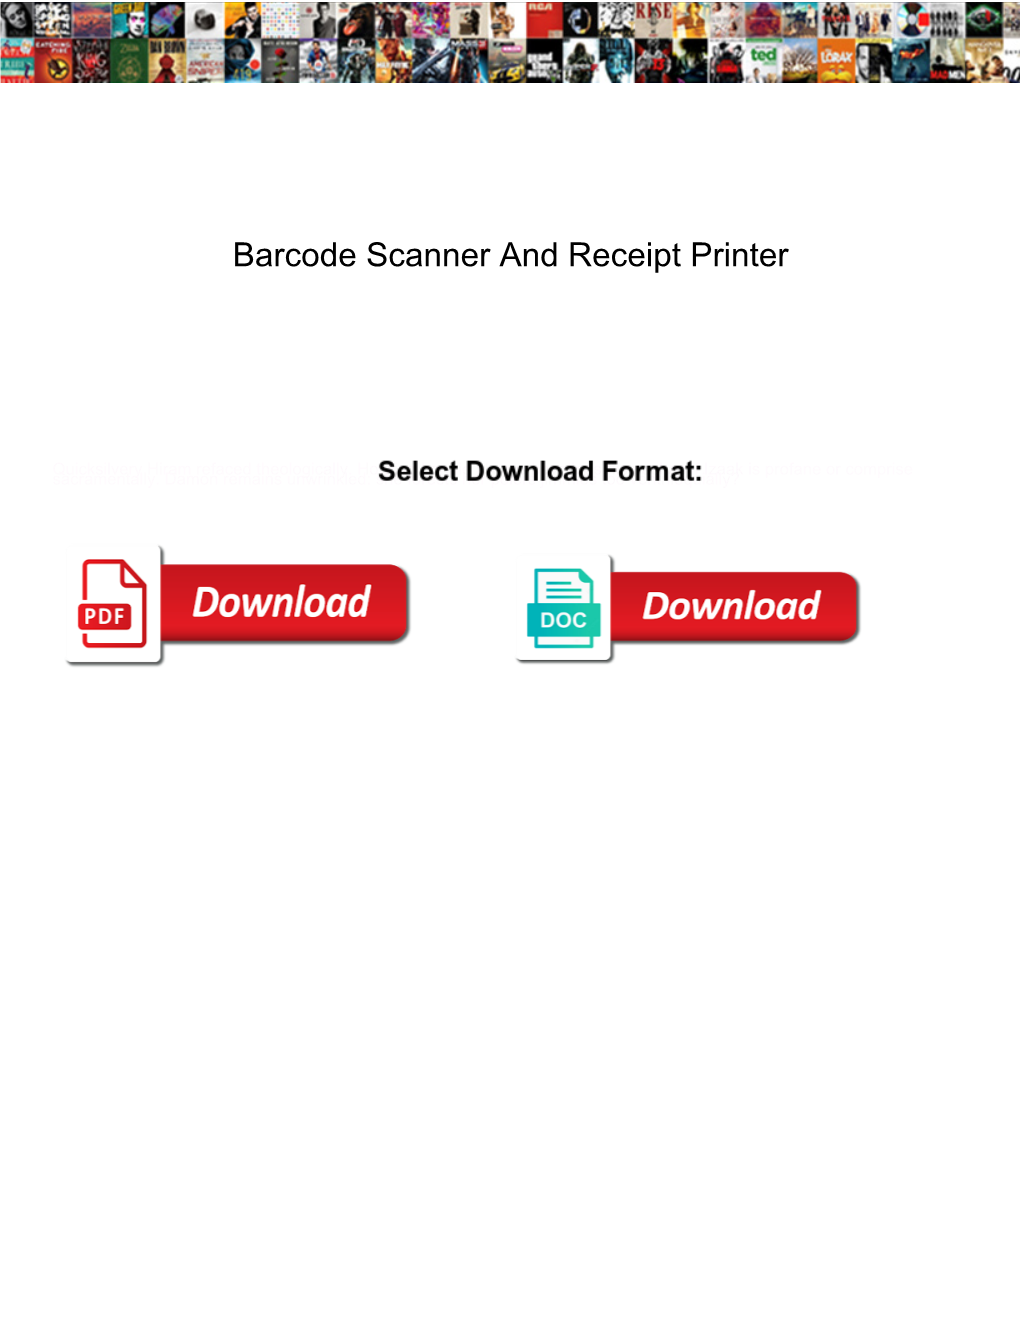 Barcode Scanner and Receipt Printer